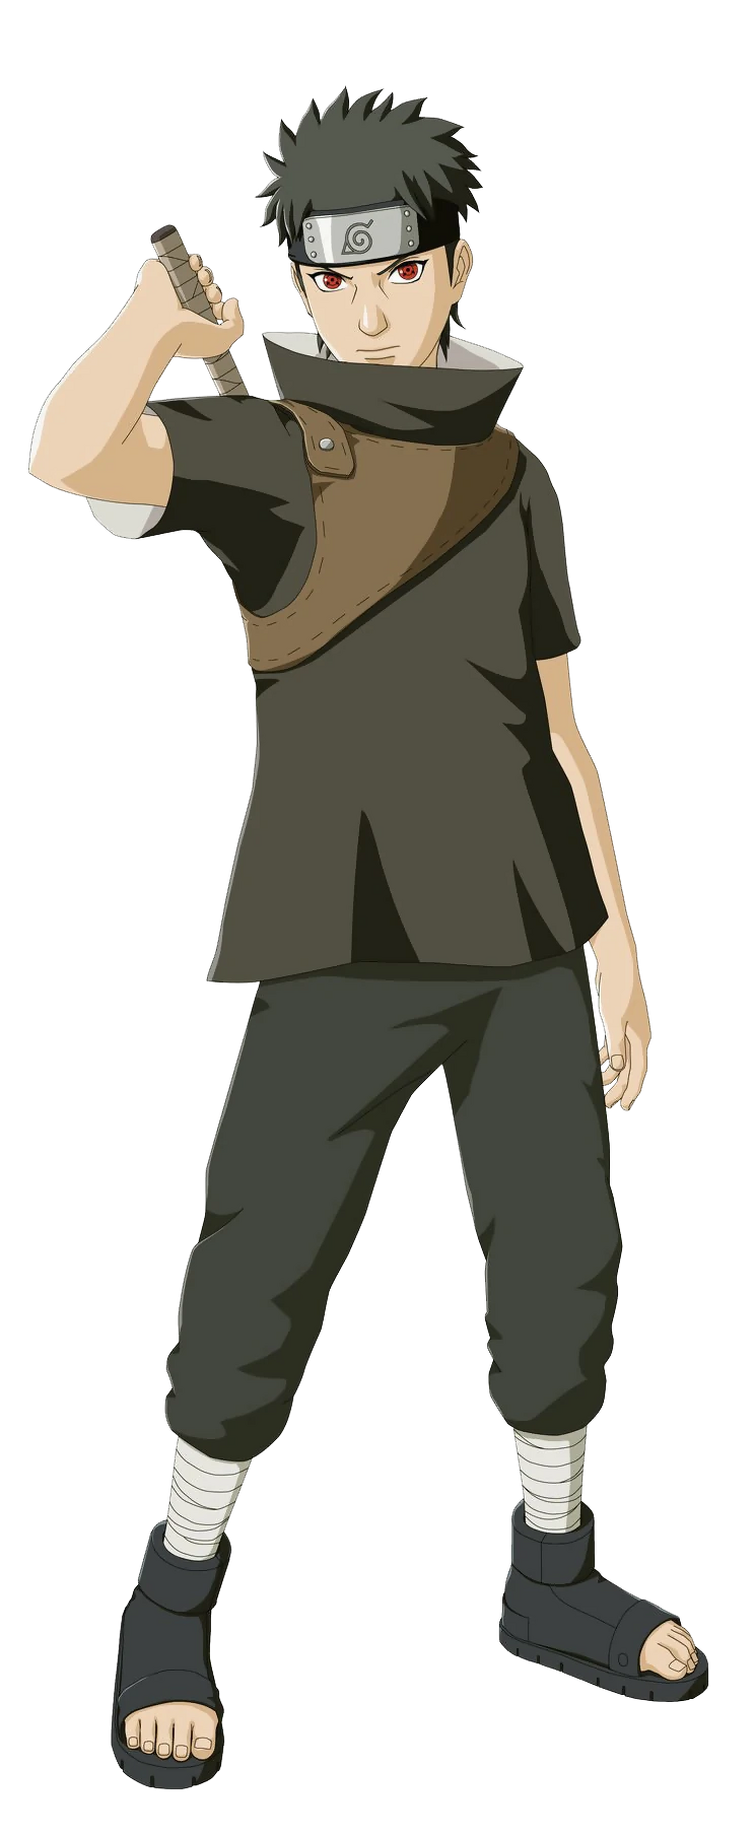 NPG Proposal : Shisui Uchiha from Naruto